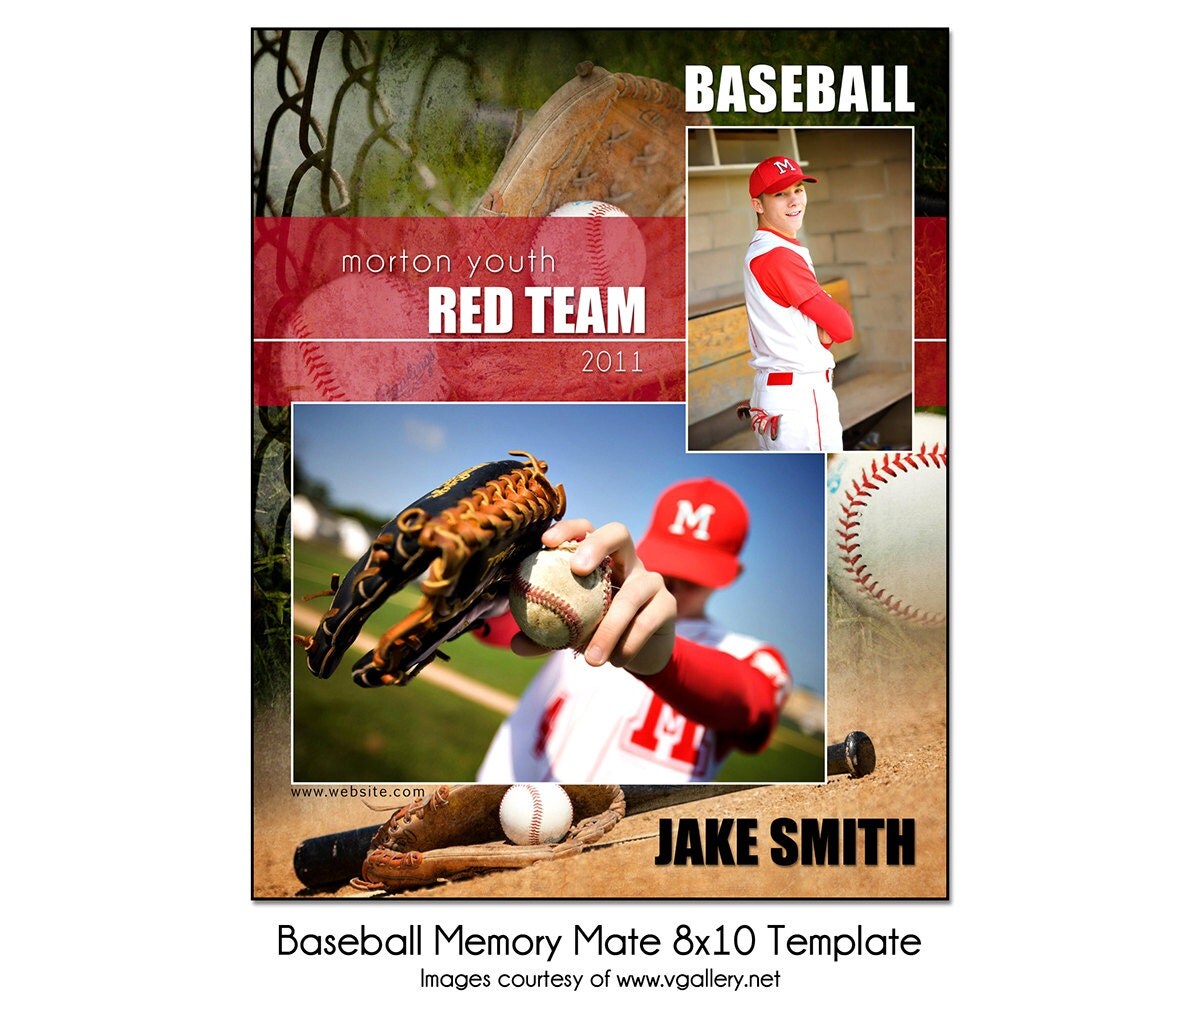 baseball-mm3-8x10-memory-mate-template-sports-photo